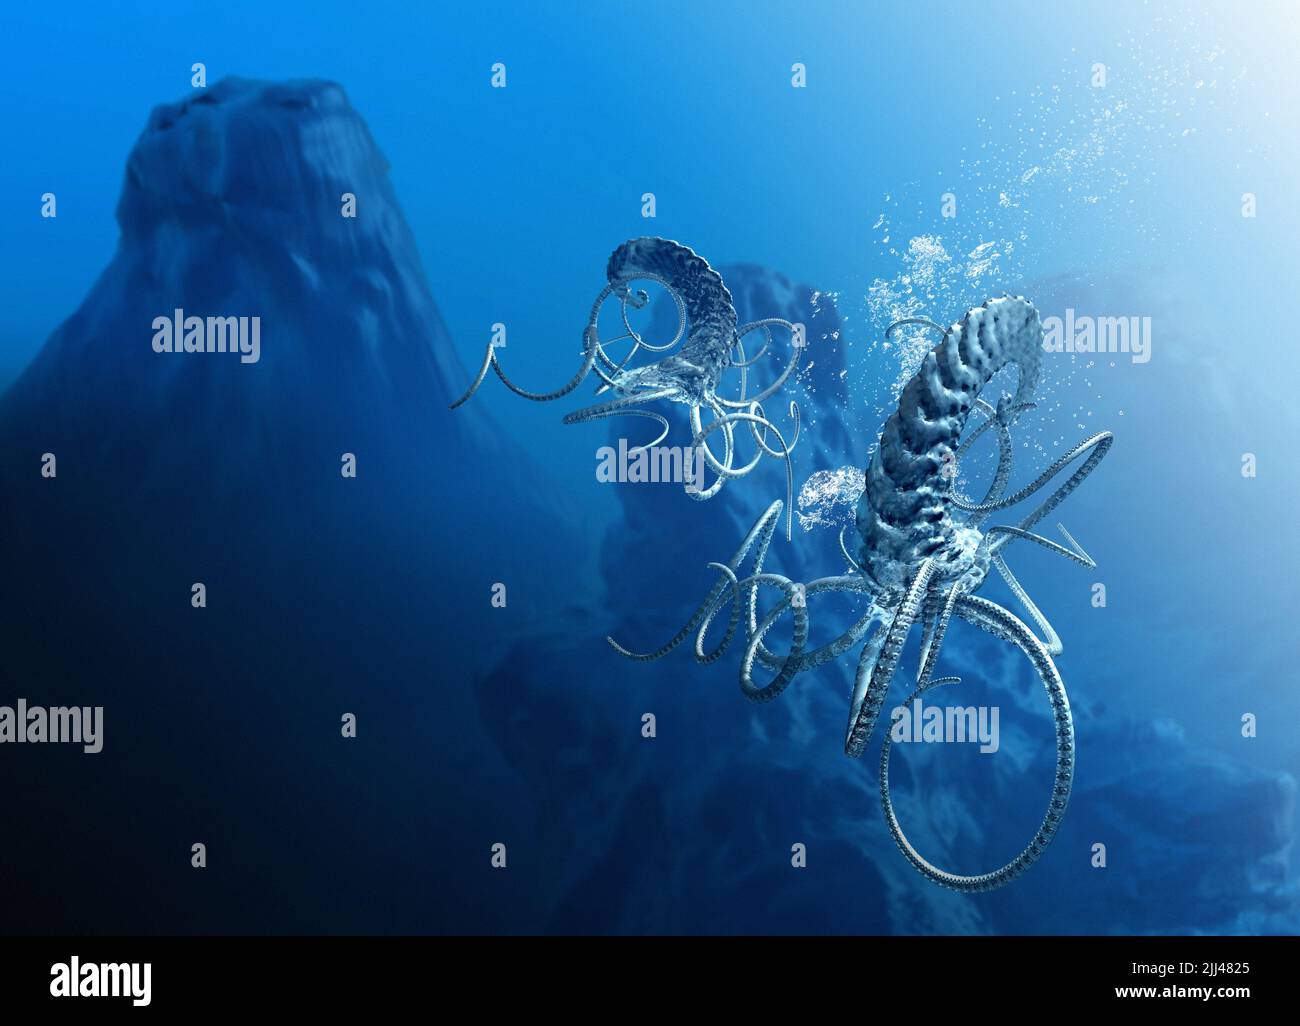 Life in Europa's ocean, conceptual illustration. Stock Photo